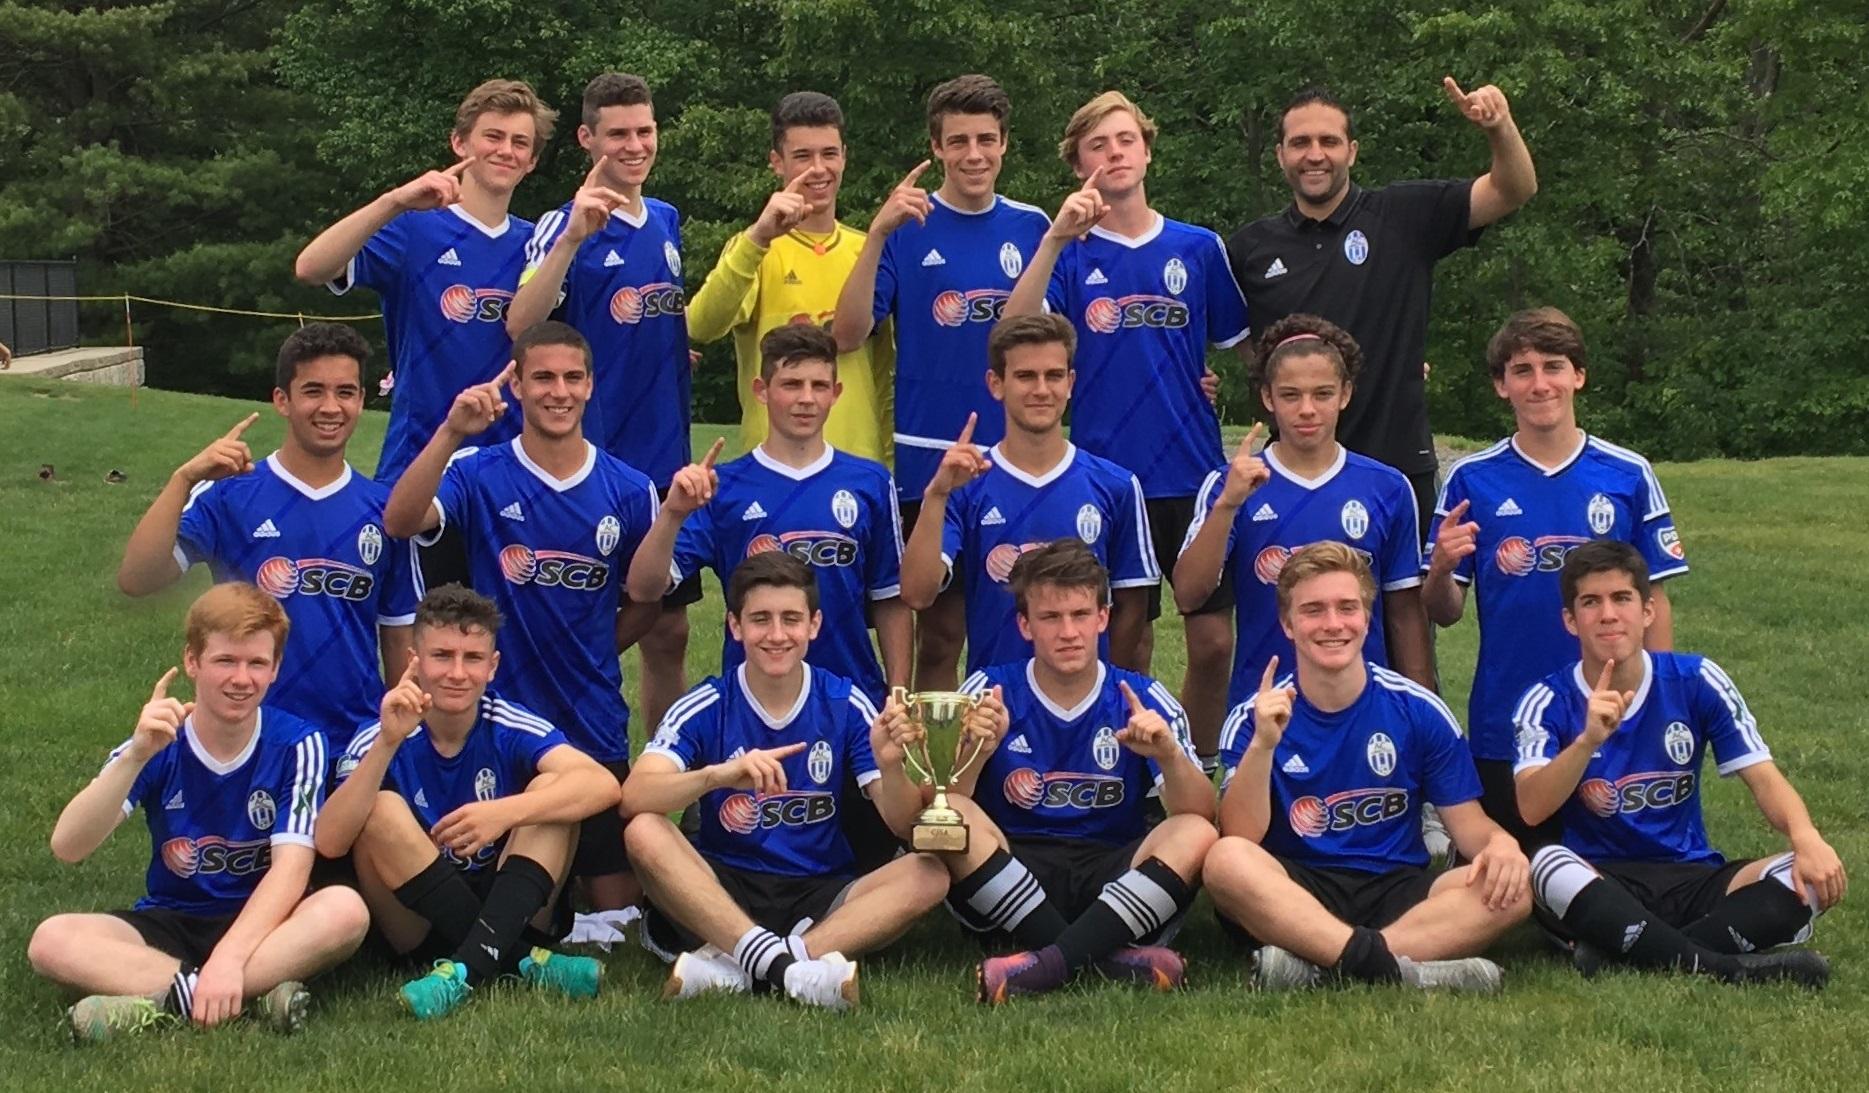 AC Connecticut U18 boys soccer team wins state title